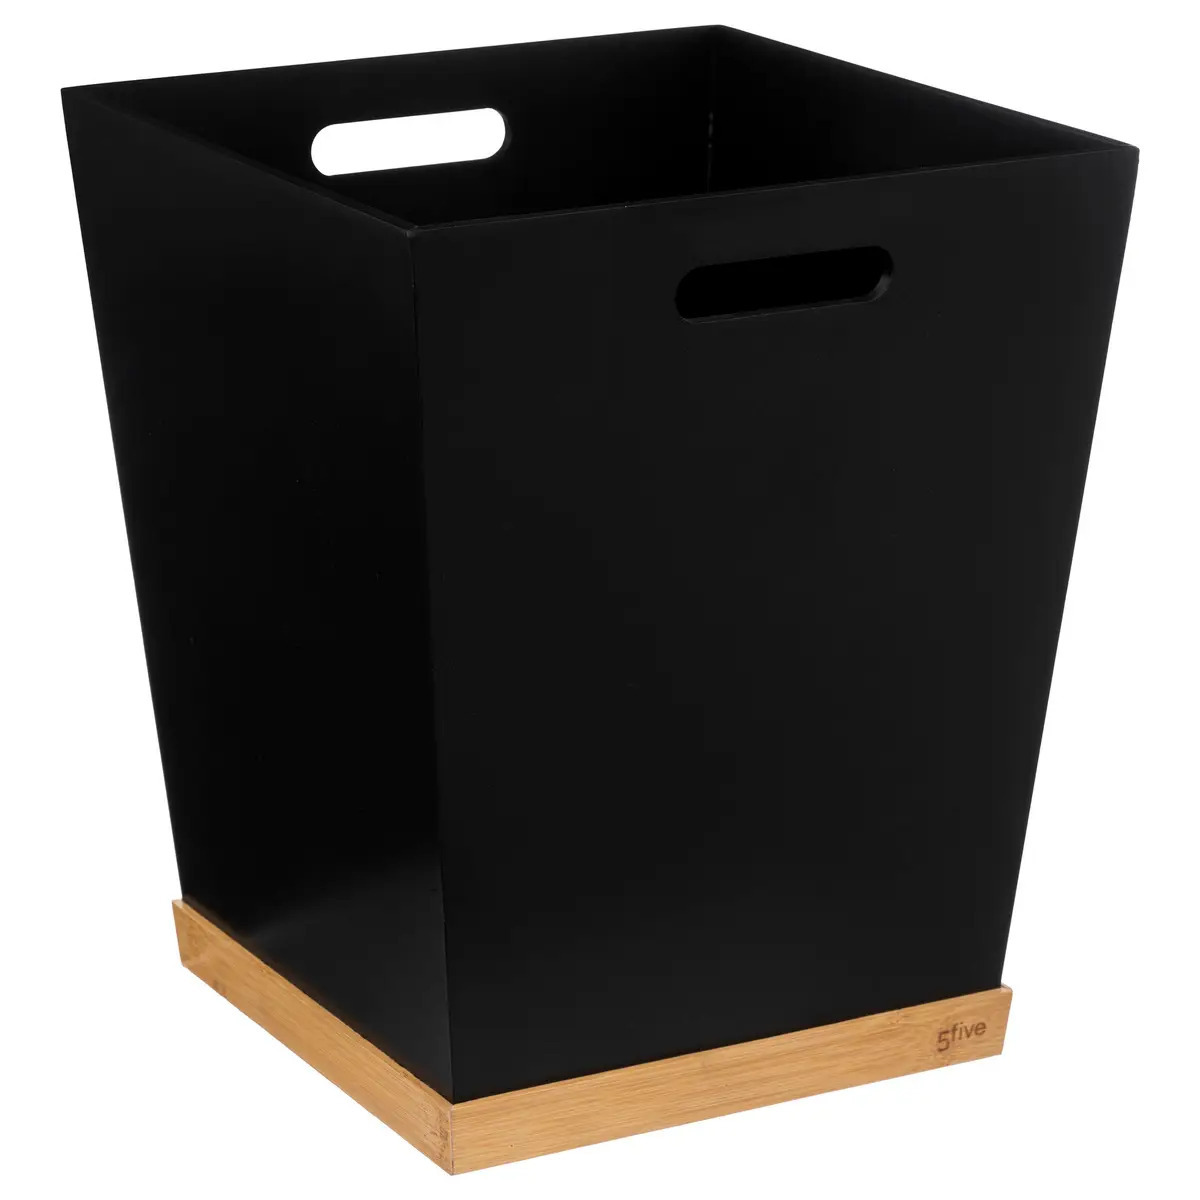 5Five Prullenbak-vuilnisbak 23 liter mdf hout zwart-lichtbruin 27 x 27 x 32 cm kantoor